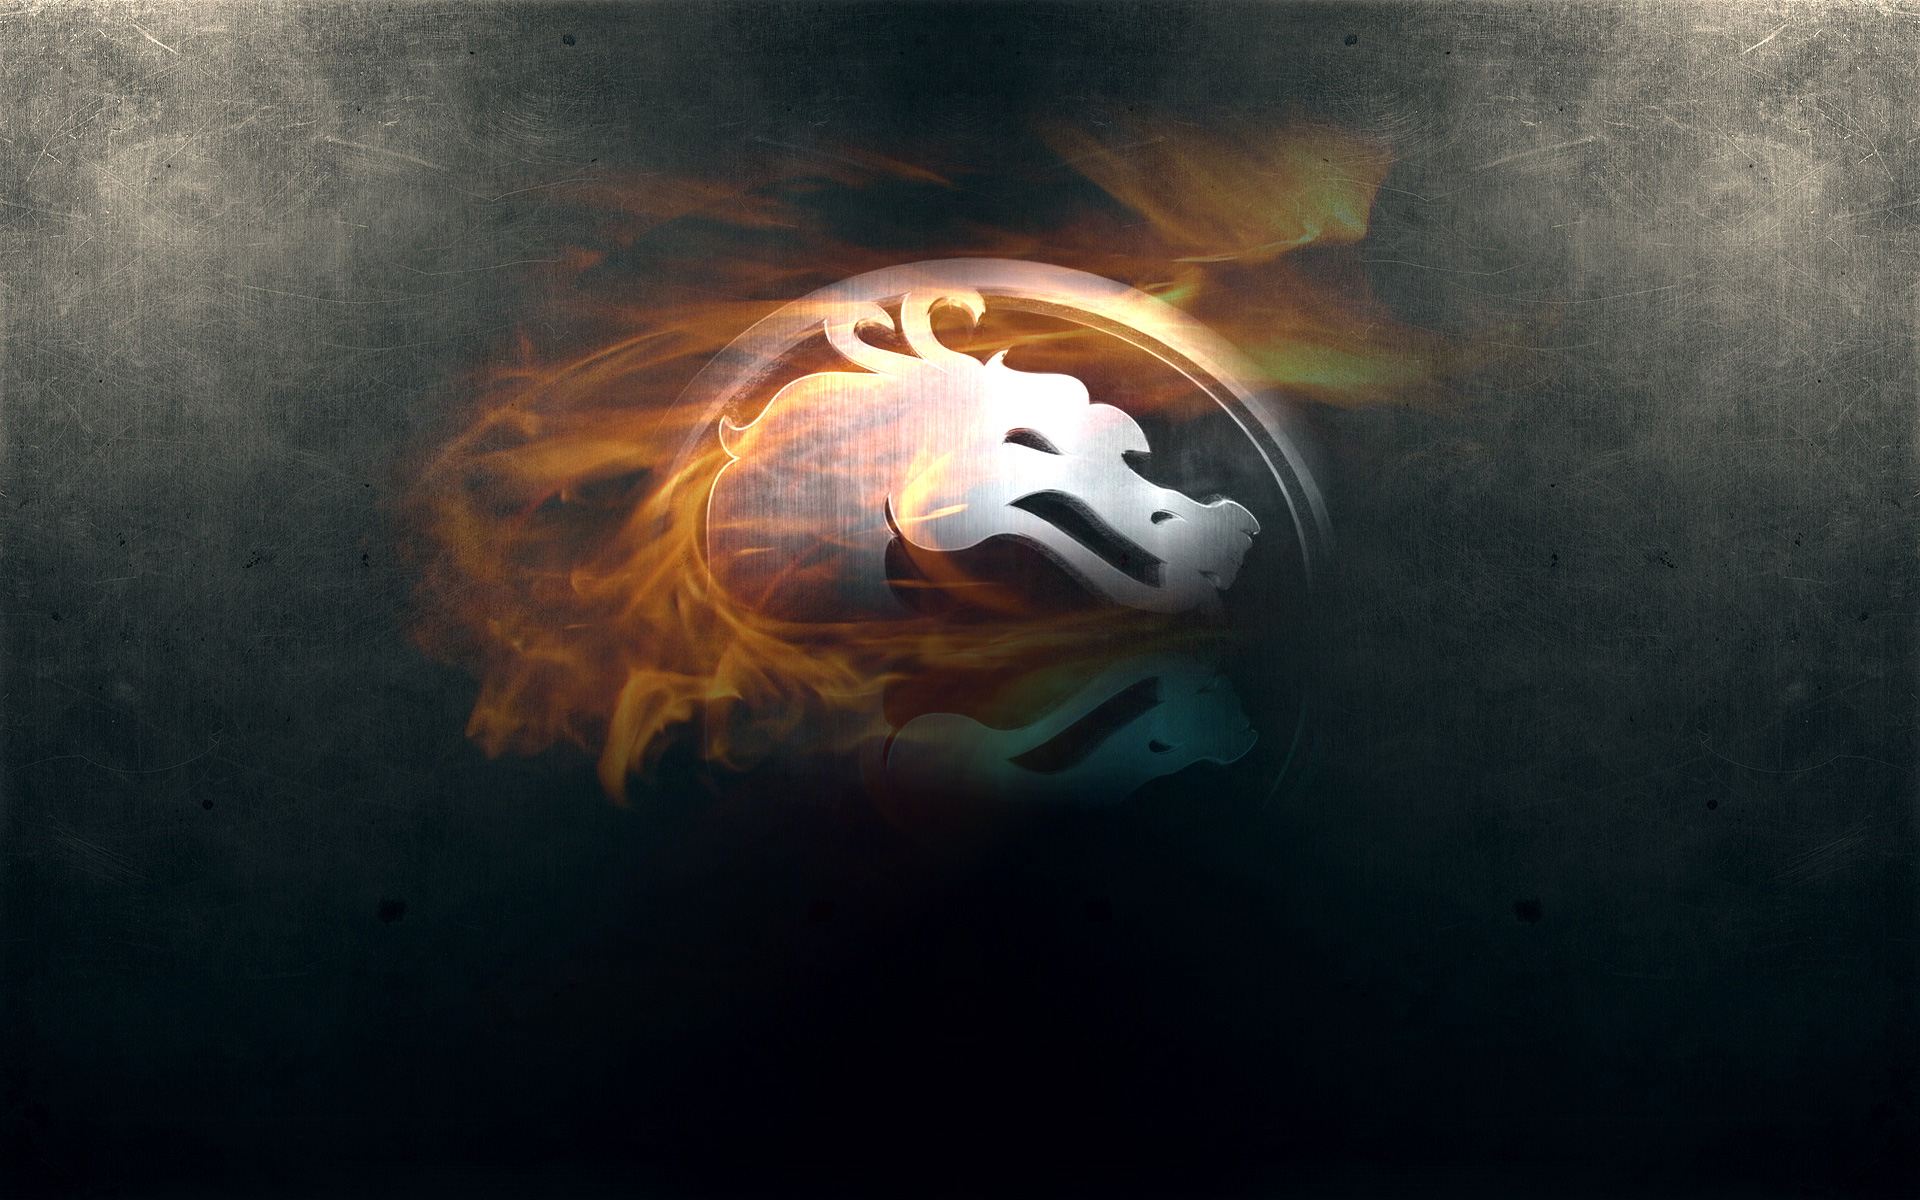 Official “Mortal Kombat X” Trailer Released - Rumors True, New 